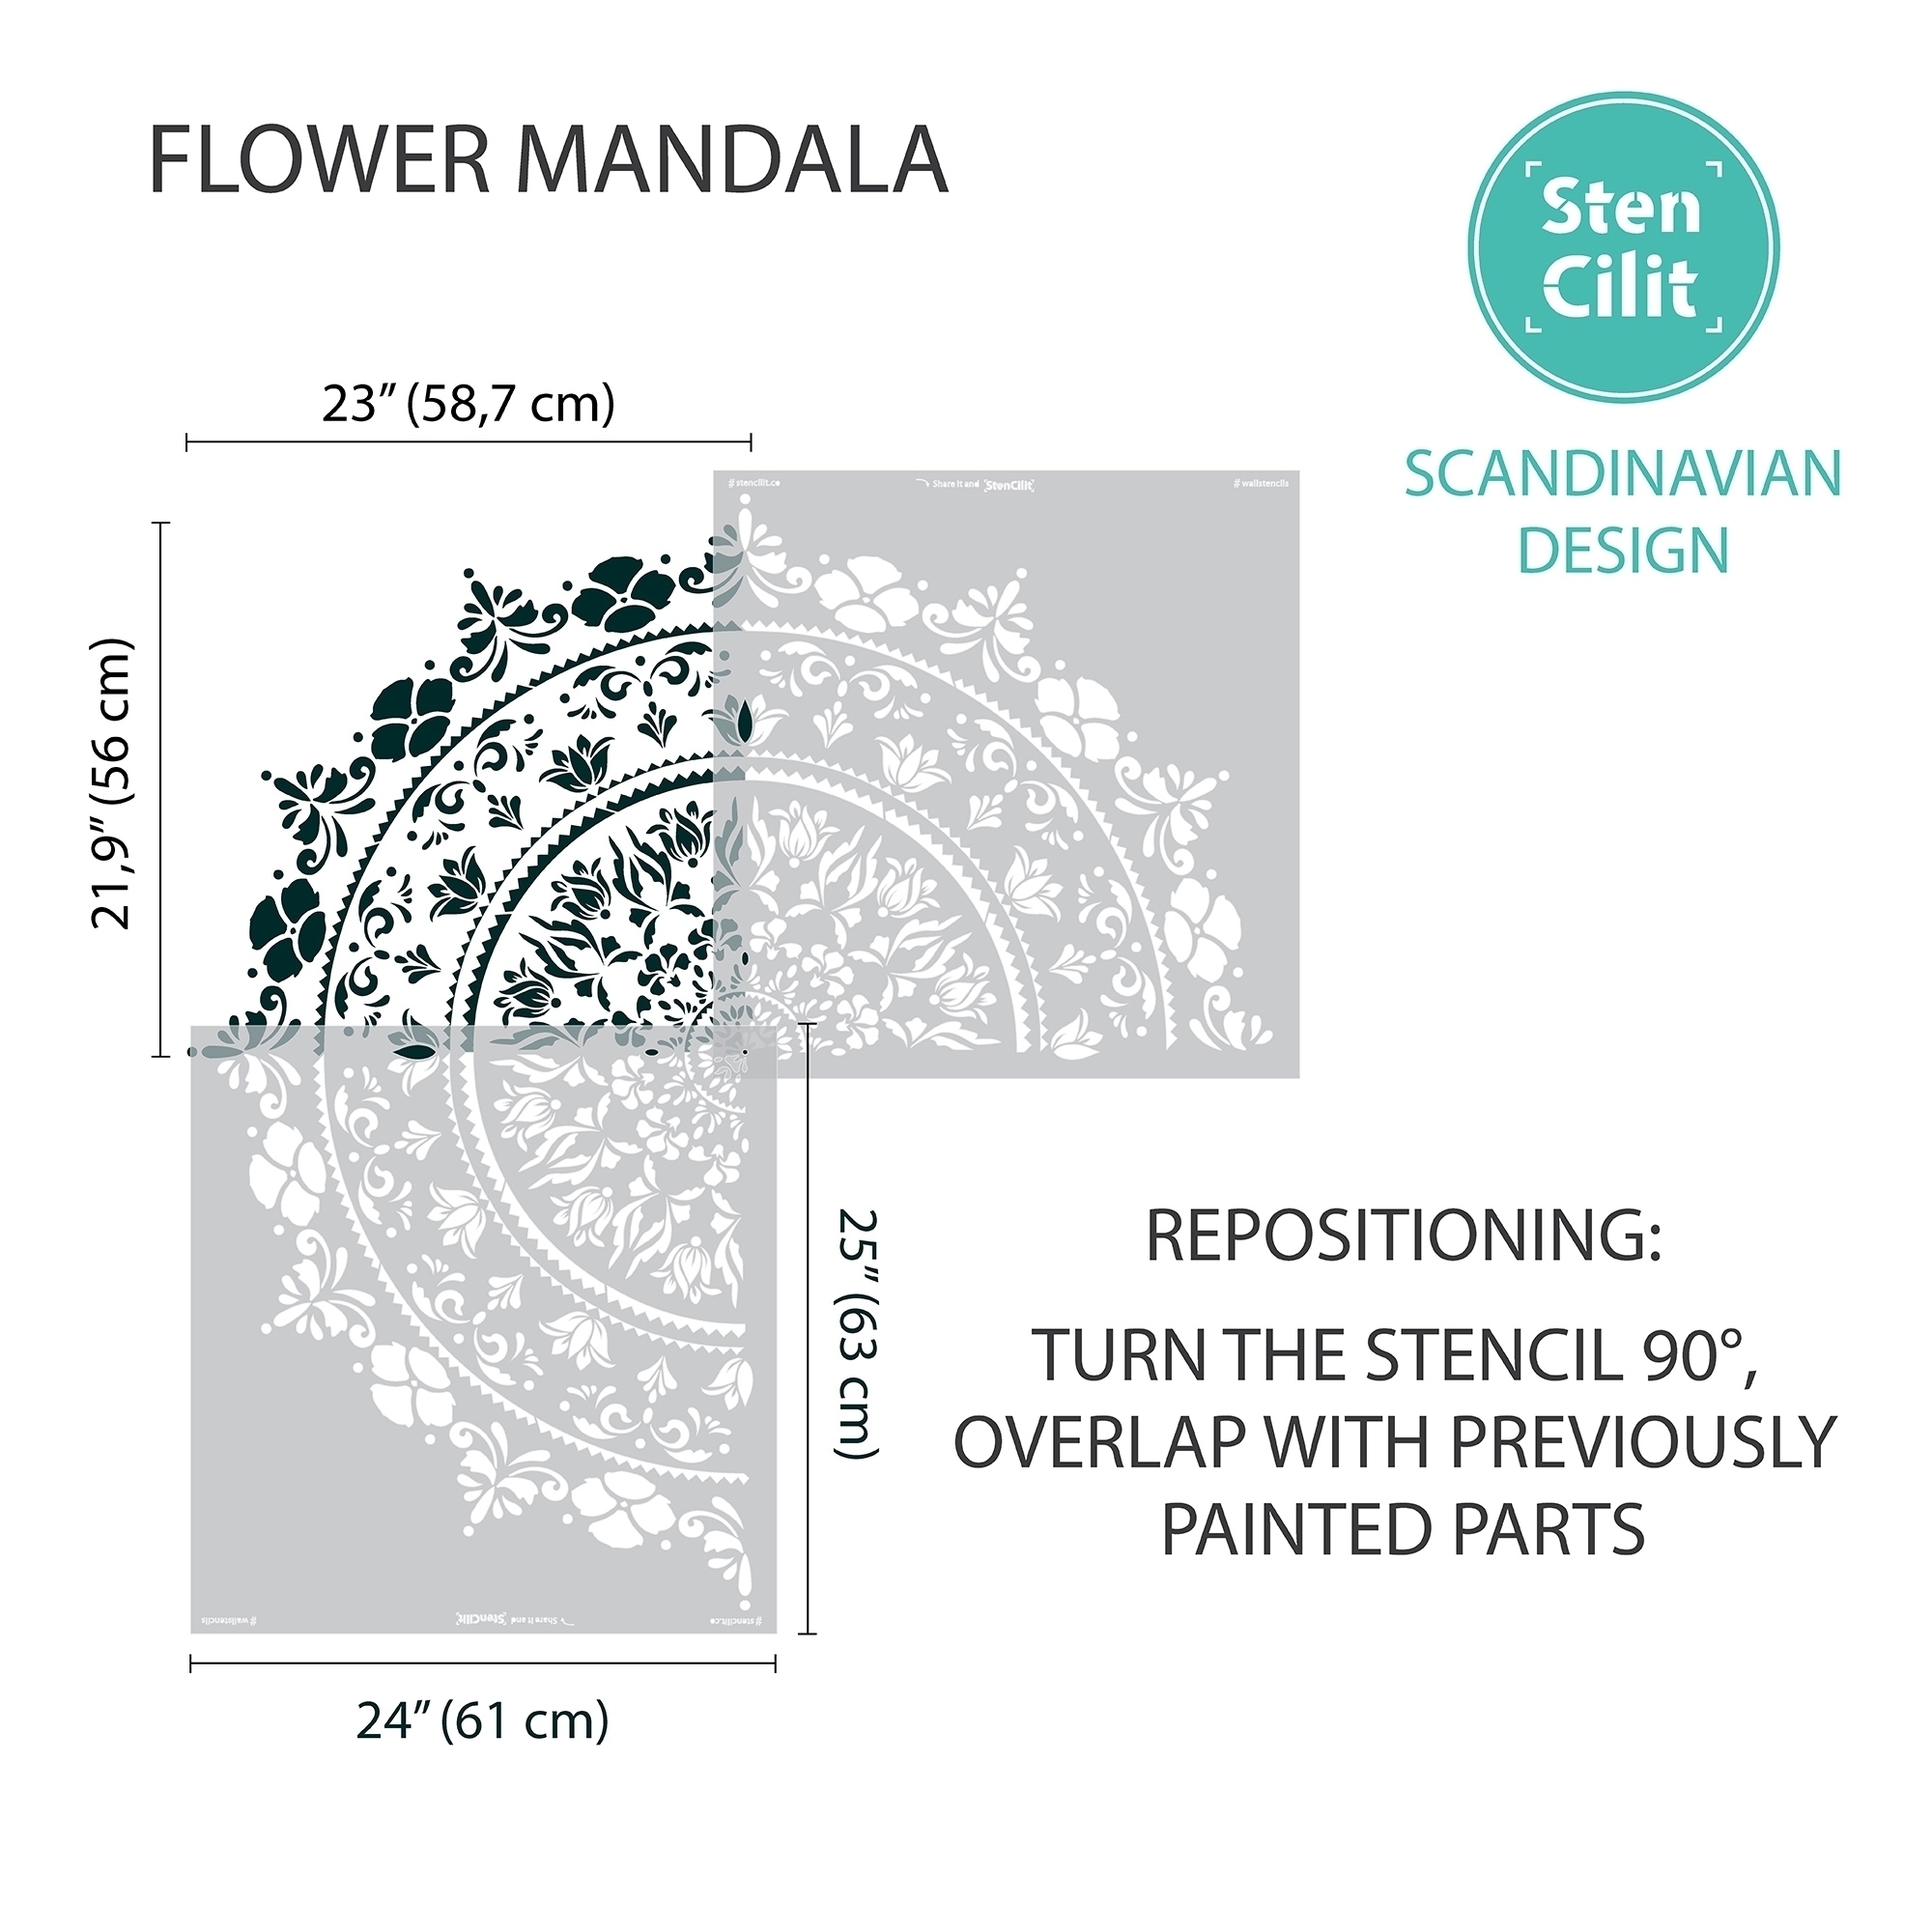 FLOWER MANDALA